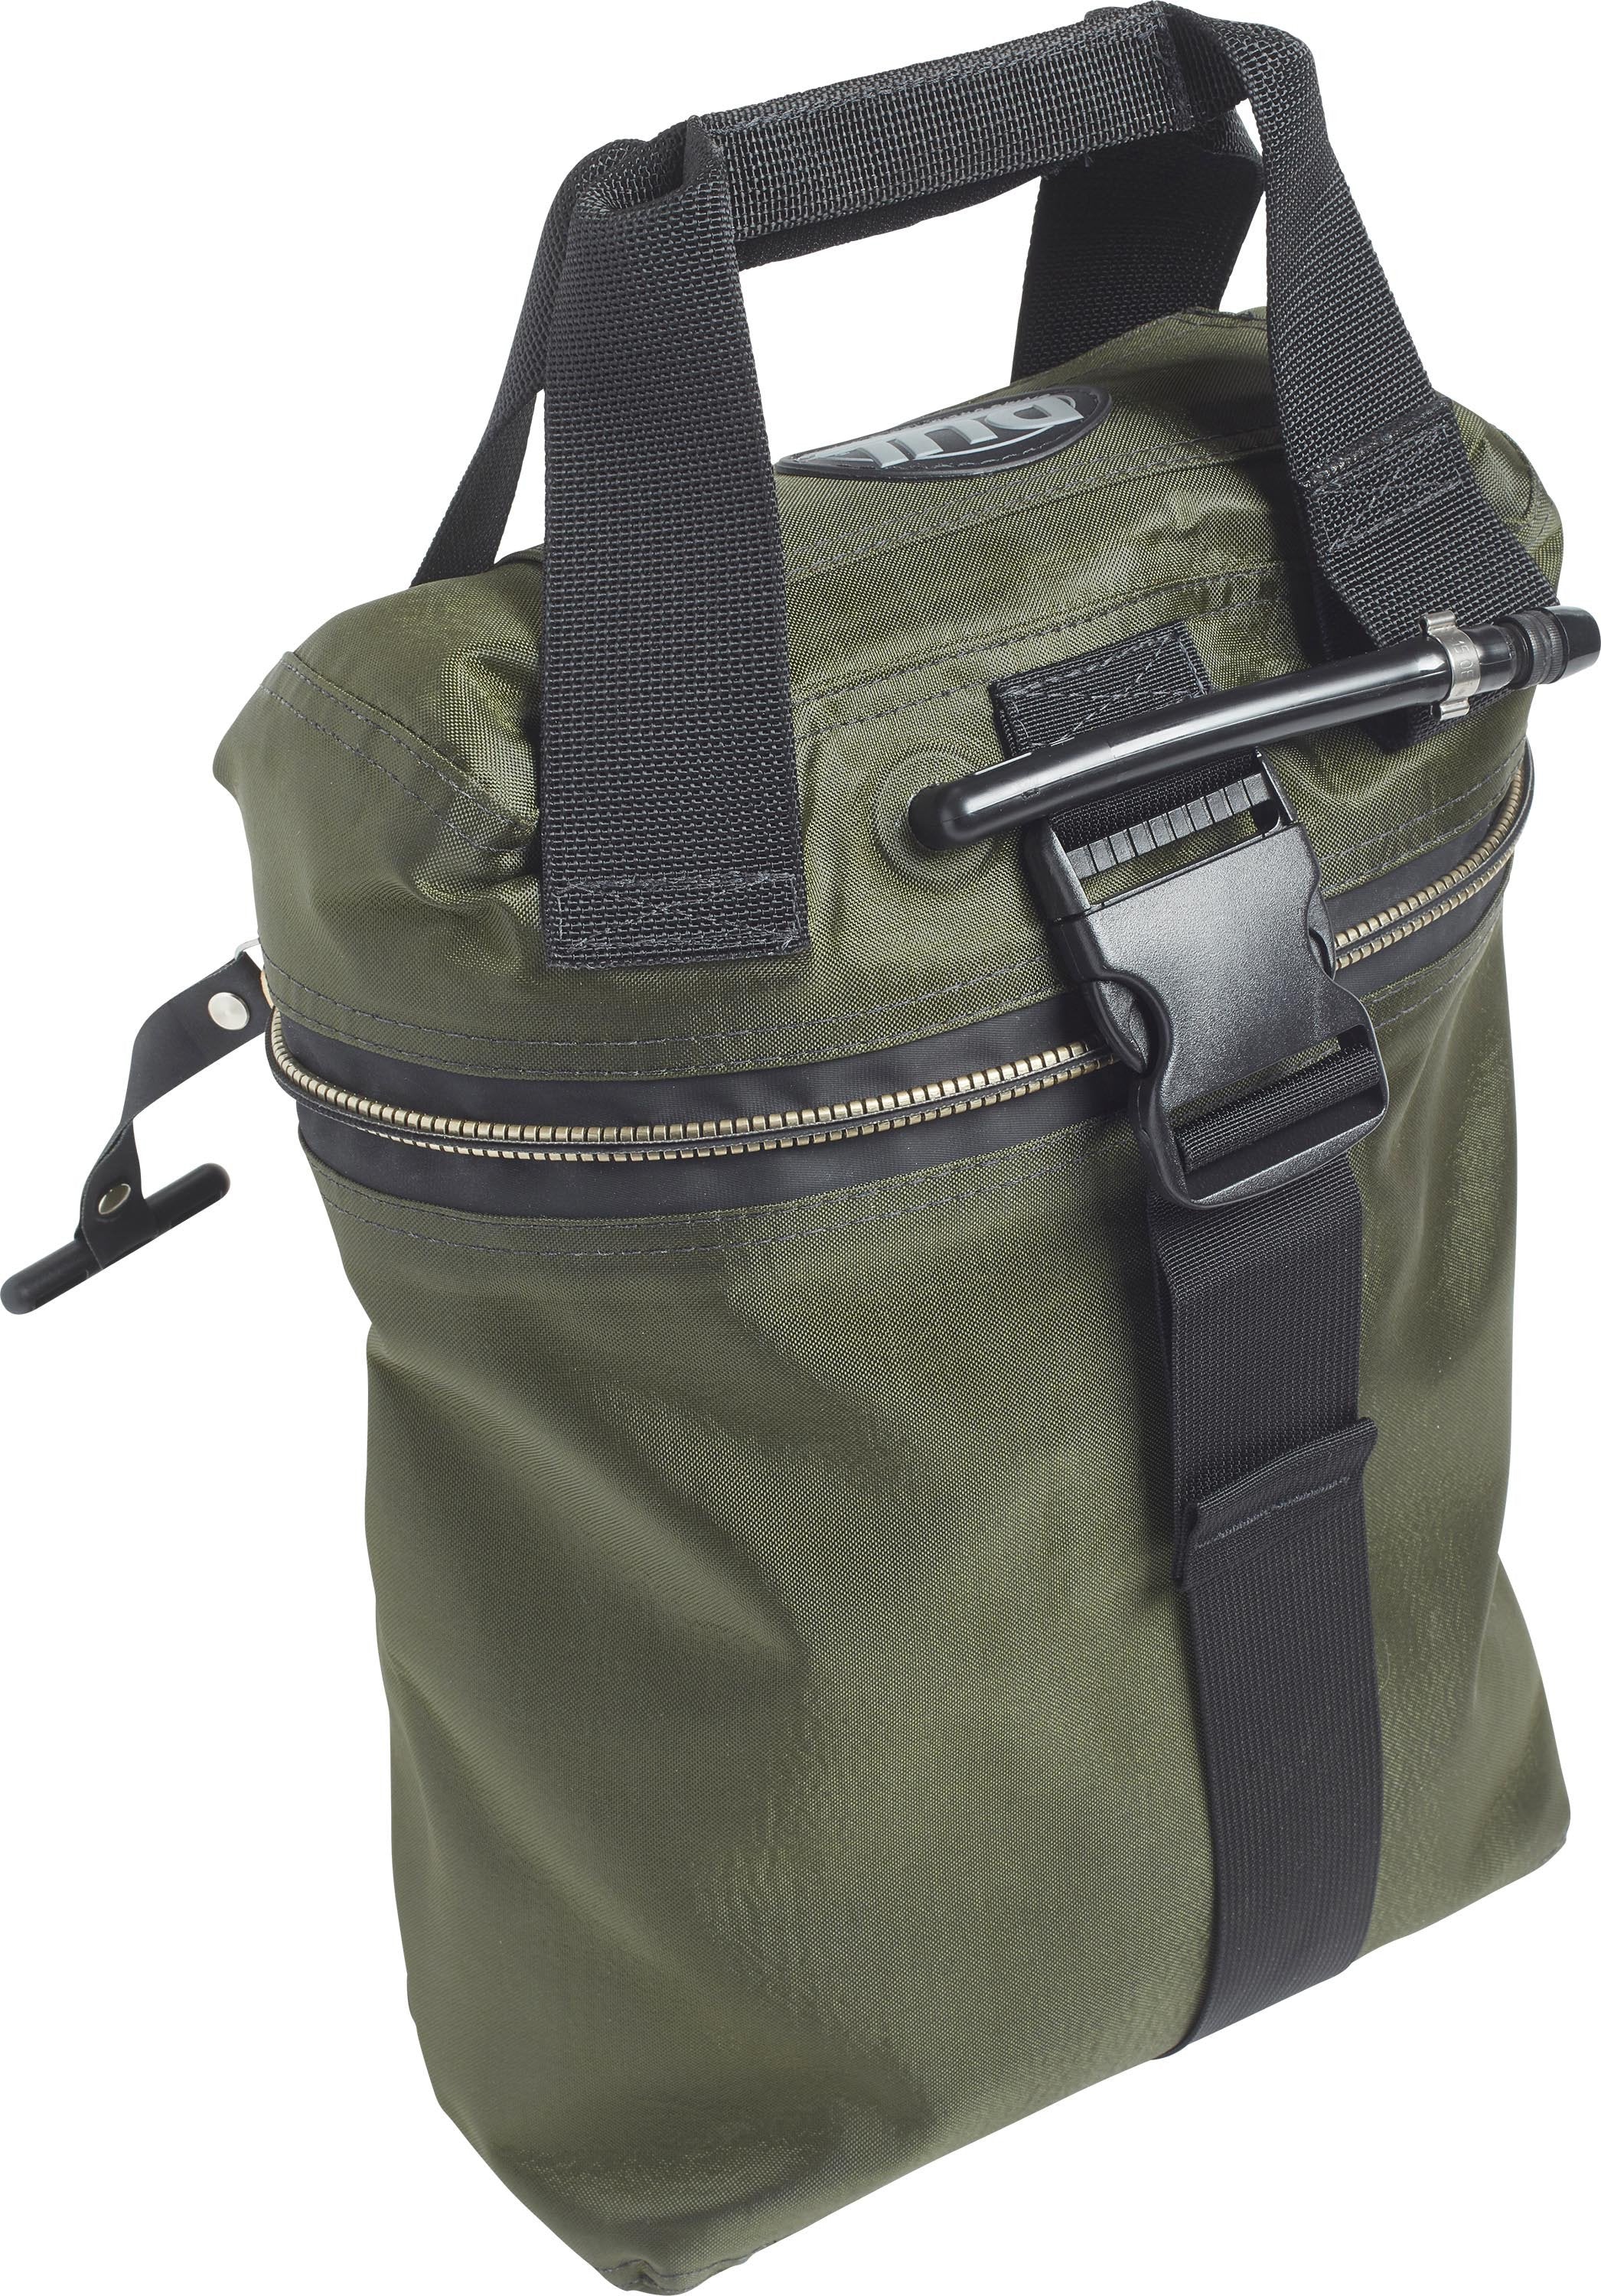 TLS Heavy Duty Rucksack Liner, Waterproof Bag - Olive Drab - Large or -  DiveDUI Military